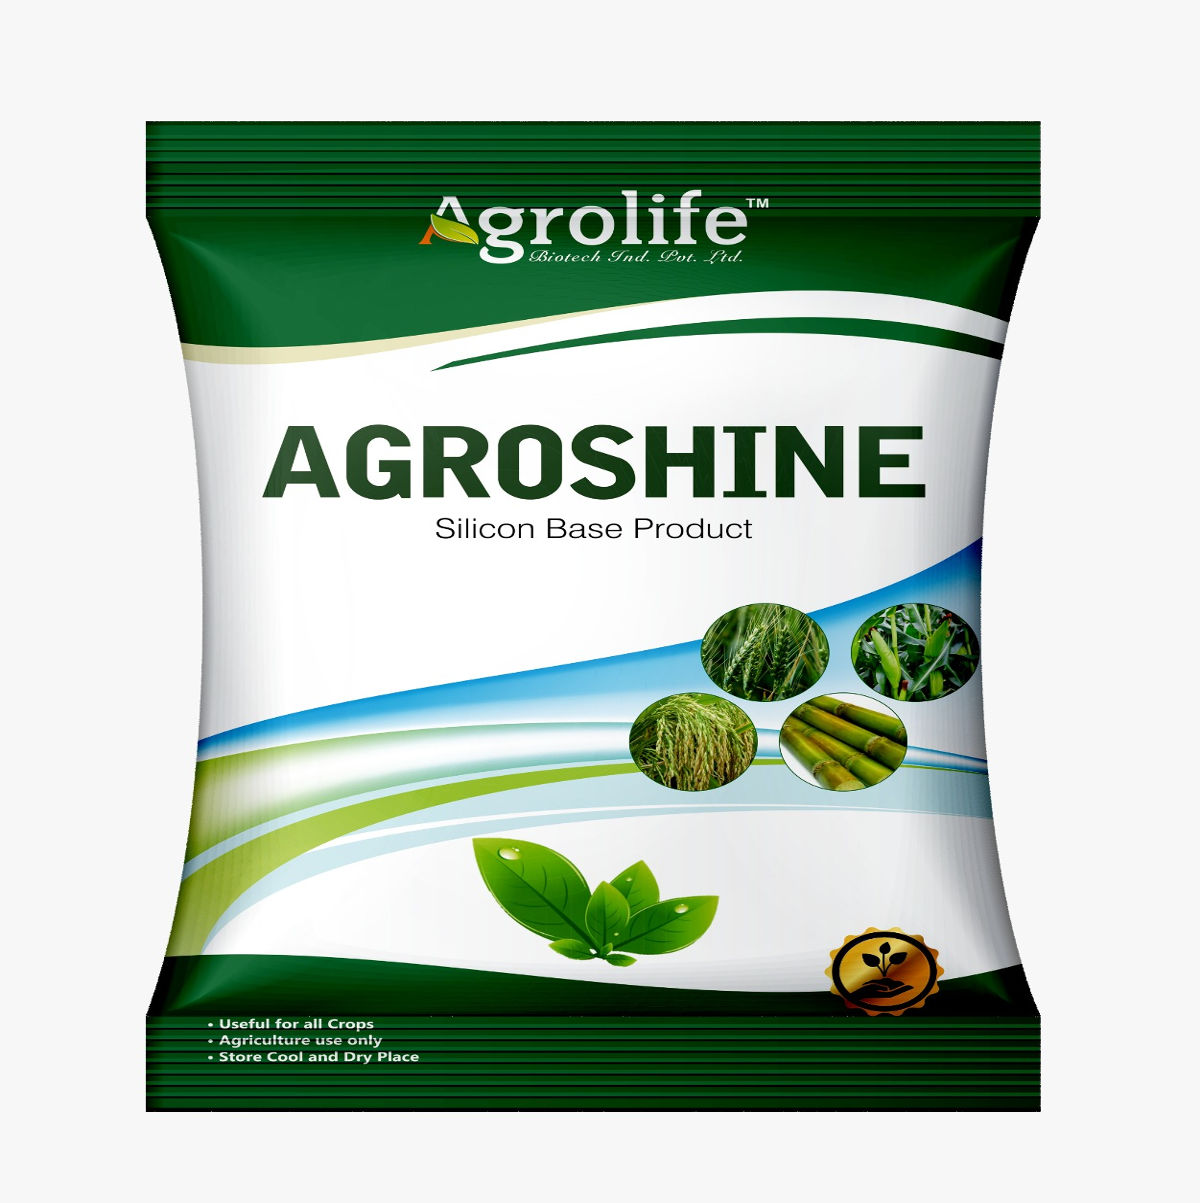 Agroshine